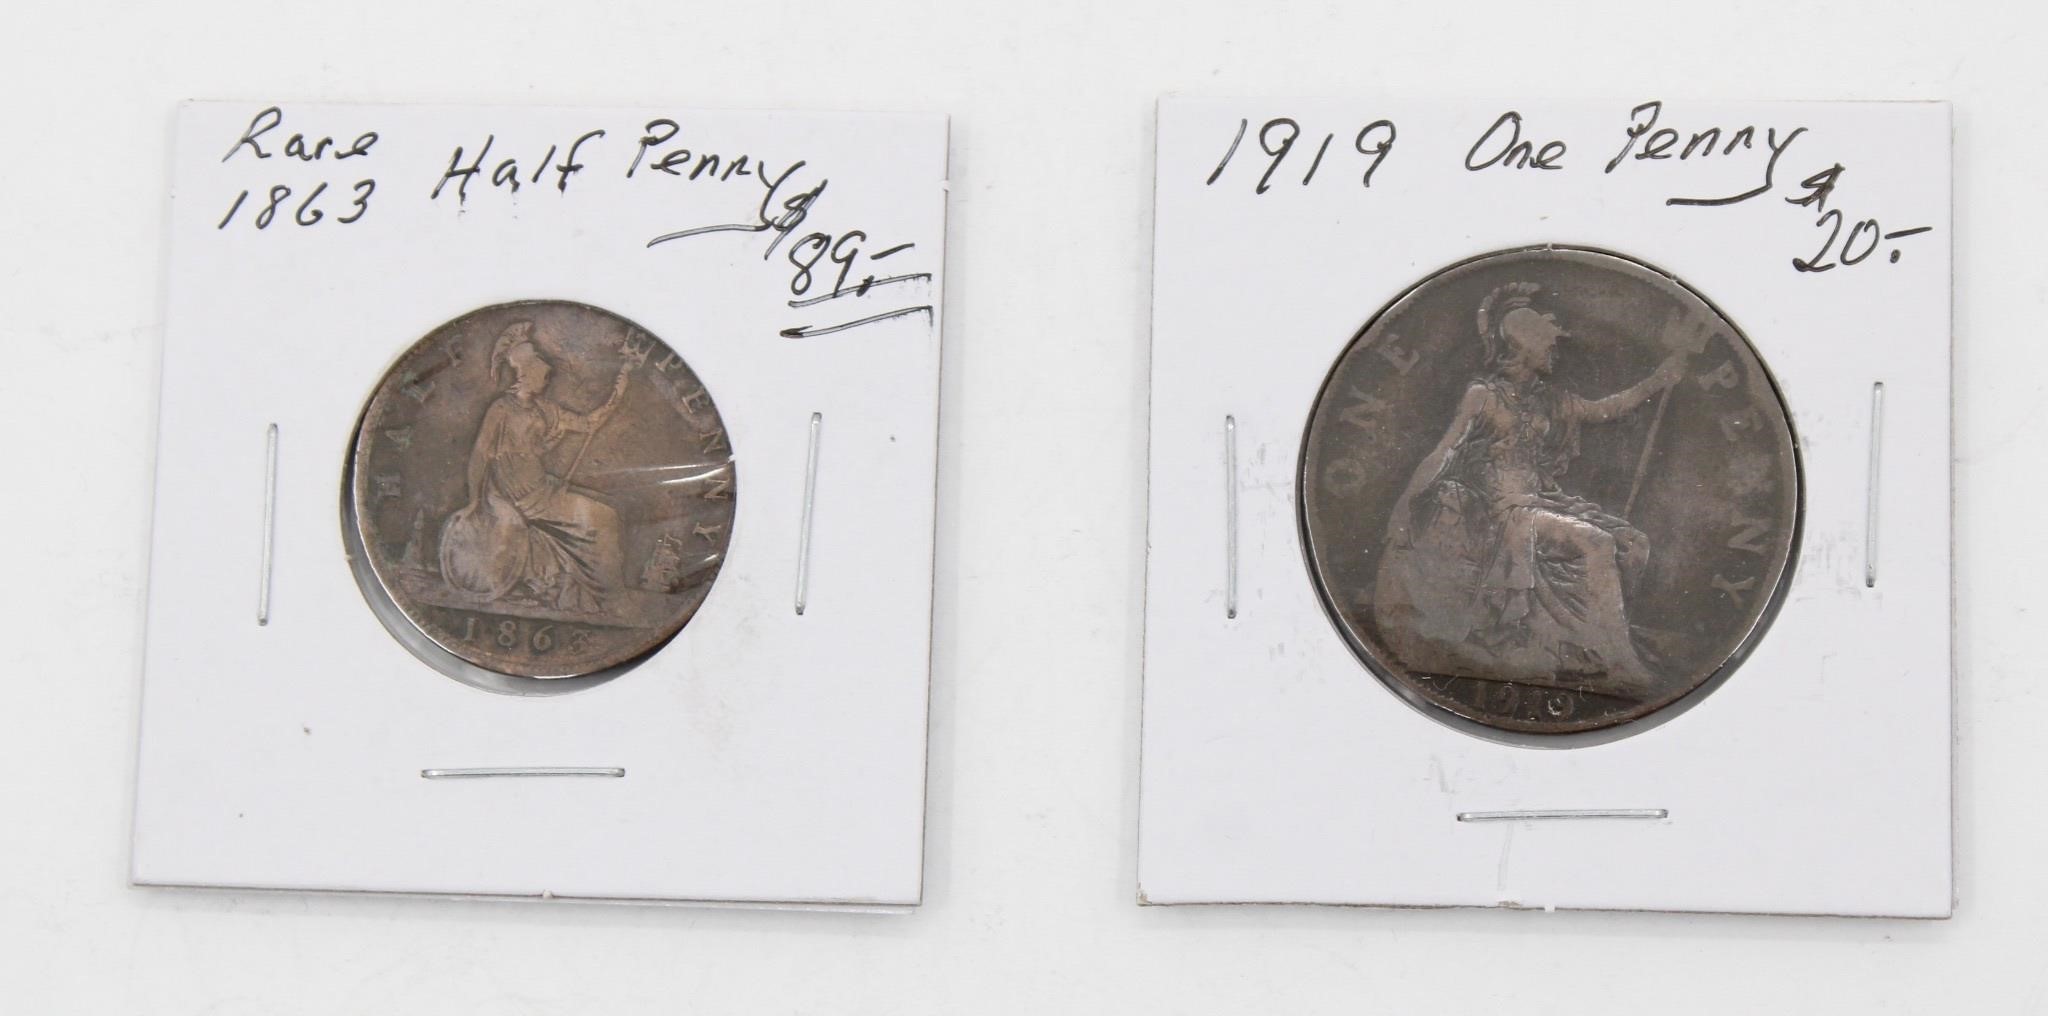 Rare 1863 Half Penny & 1919 One Penny